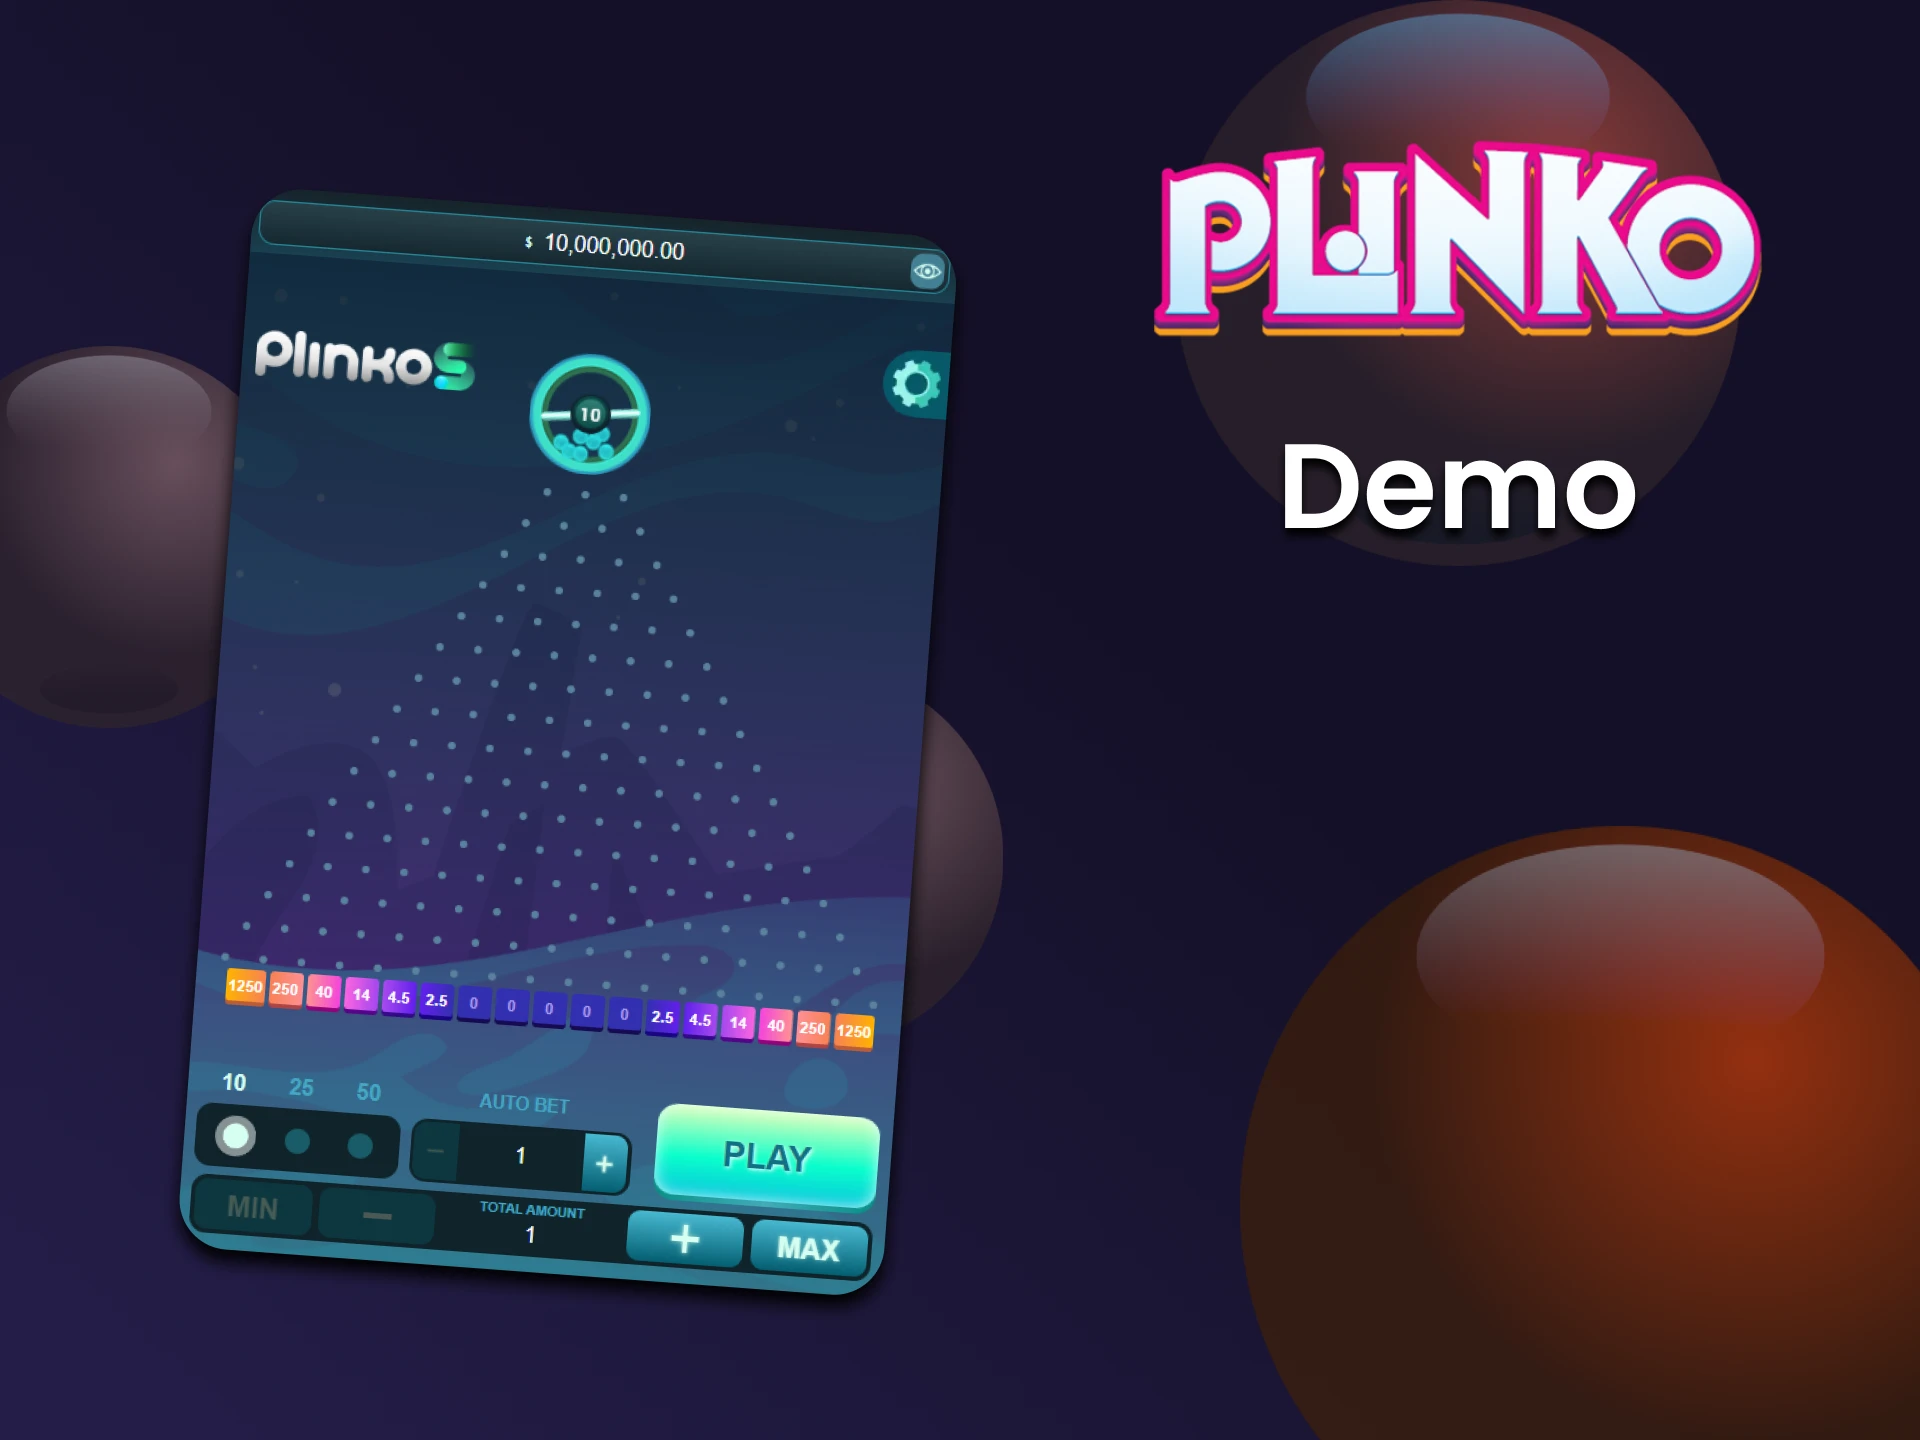 Practice in the demo version of the Plinko game.